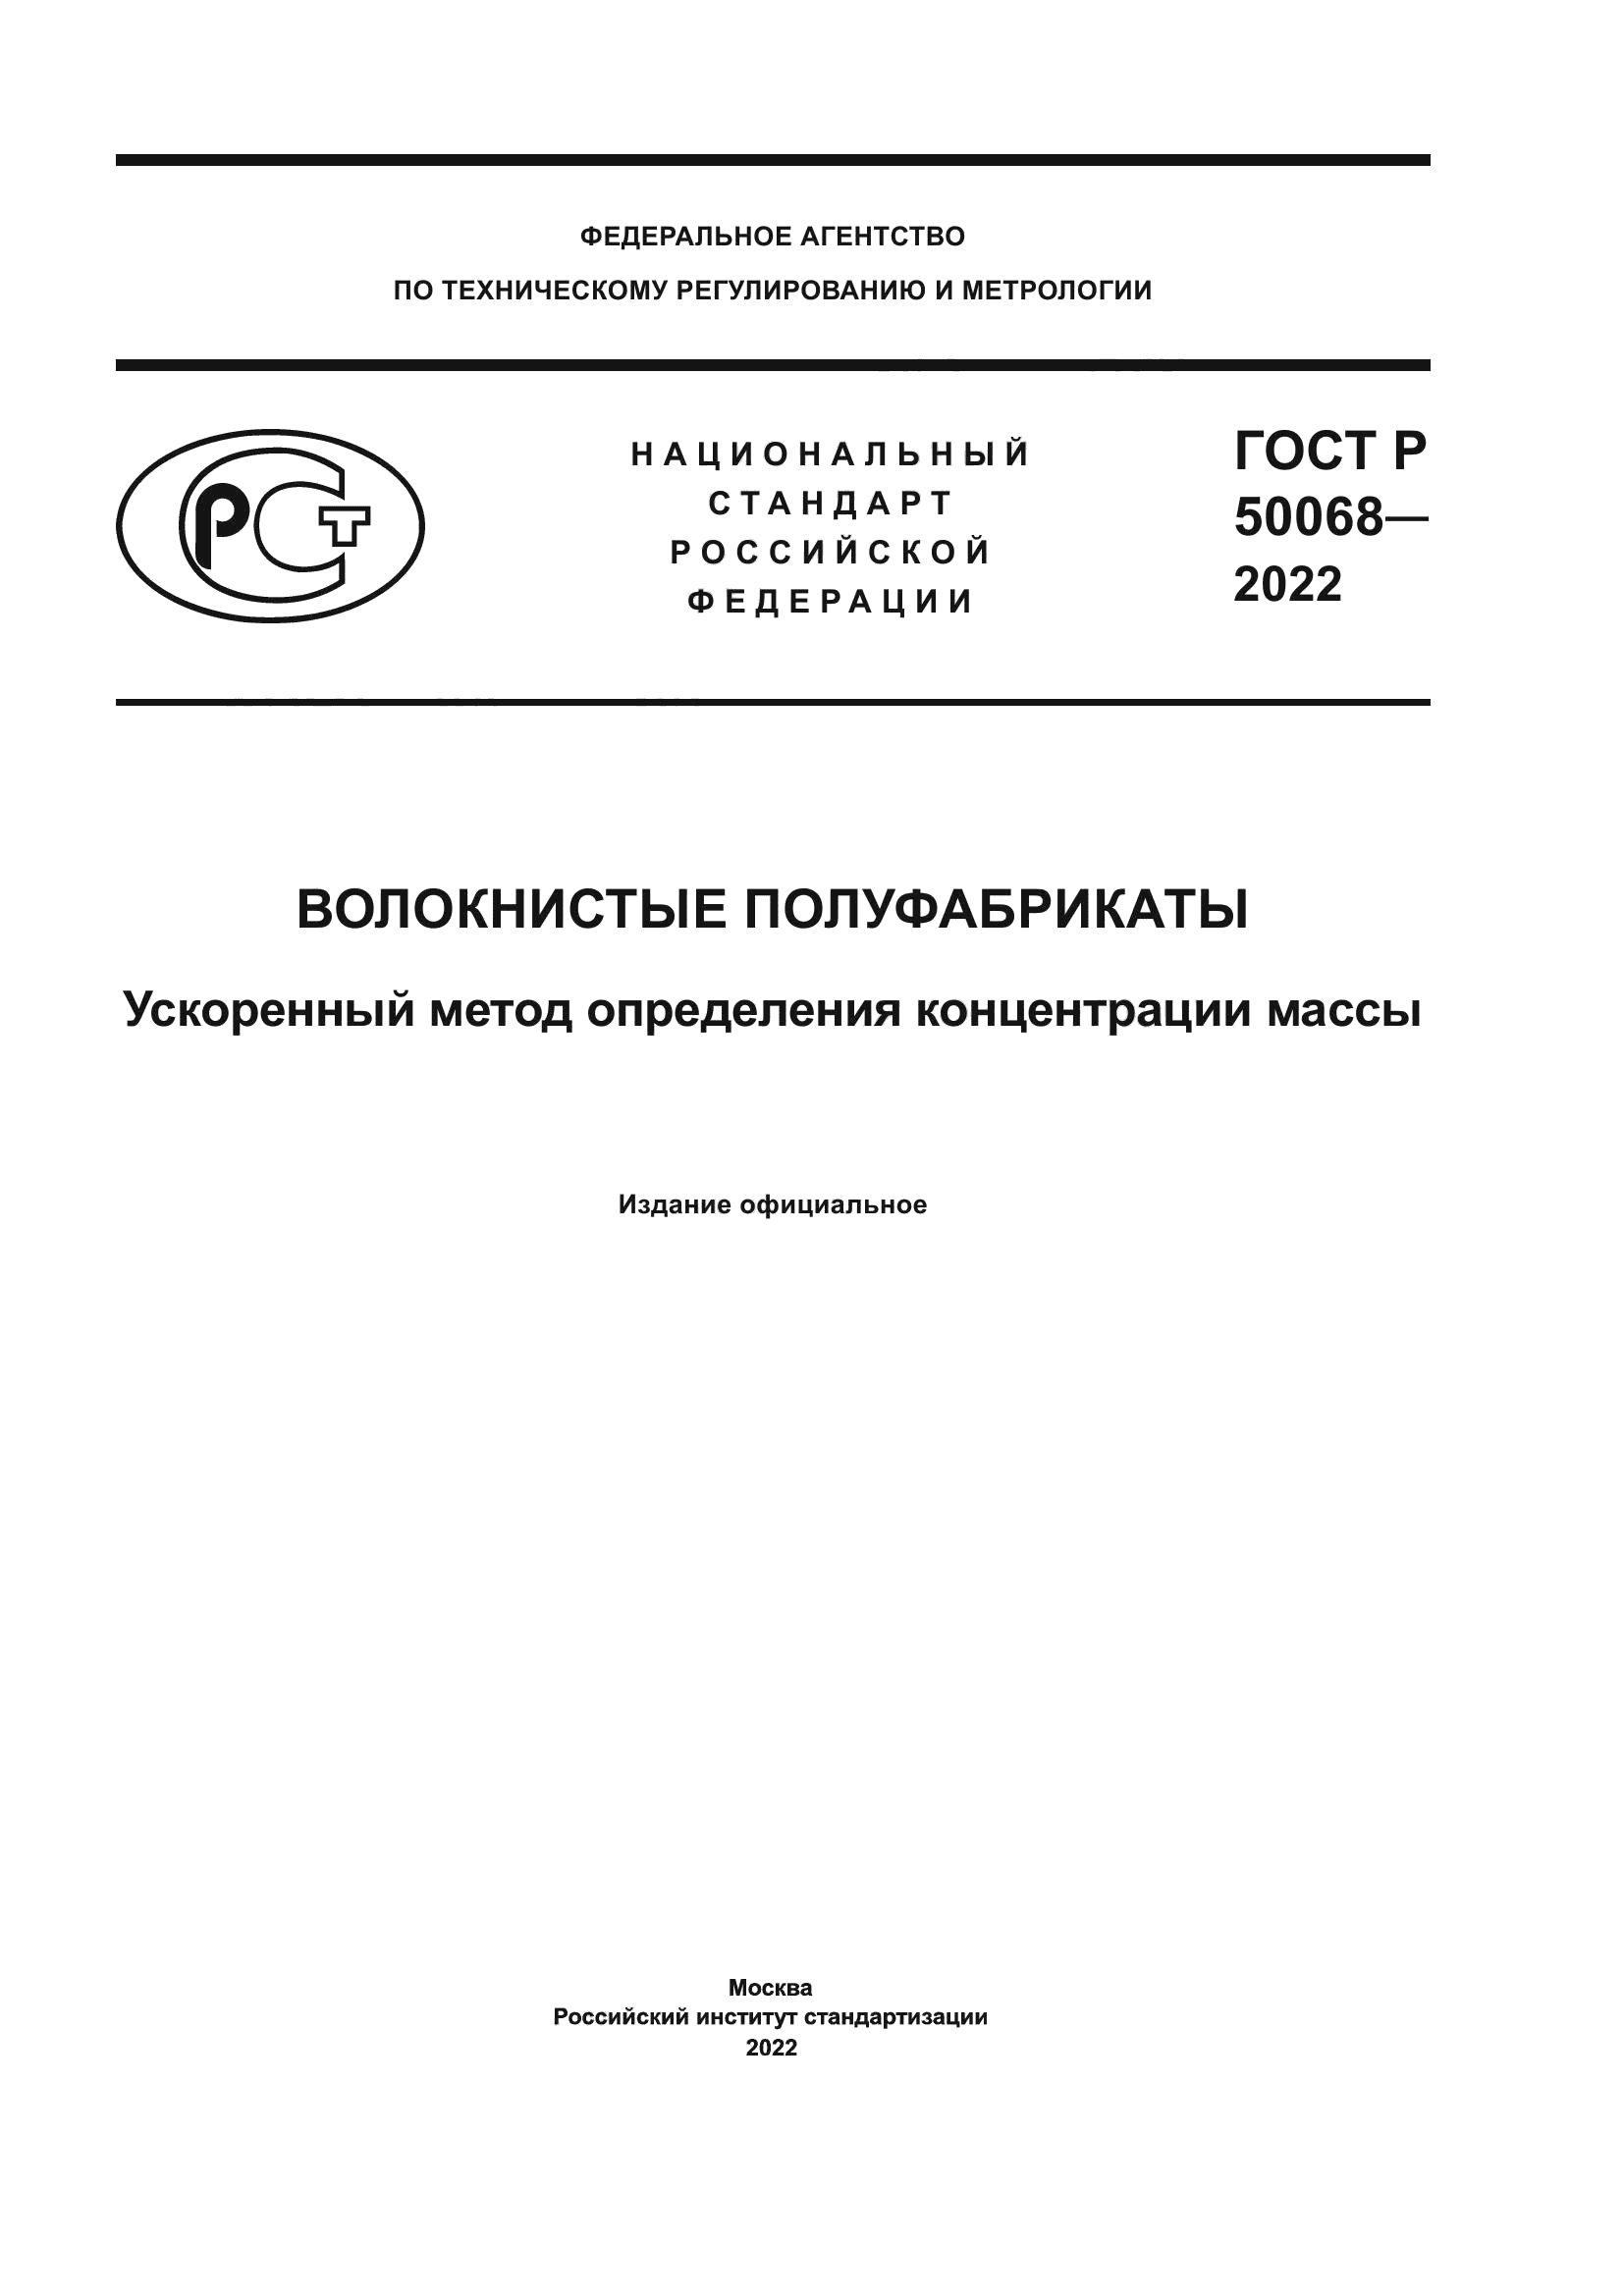 ГОСТ Р 50068-2022